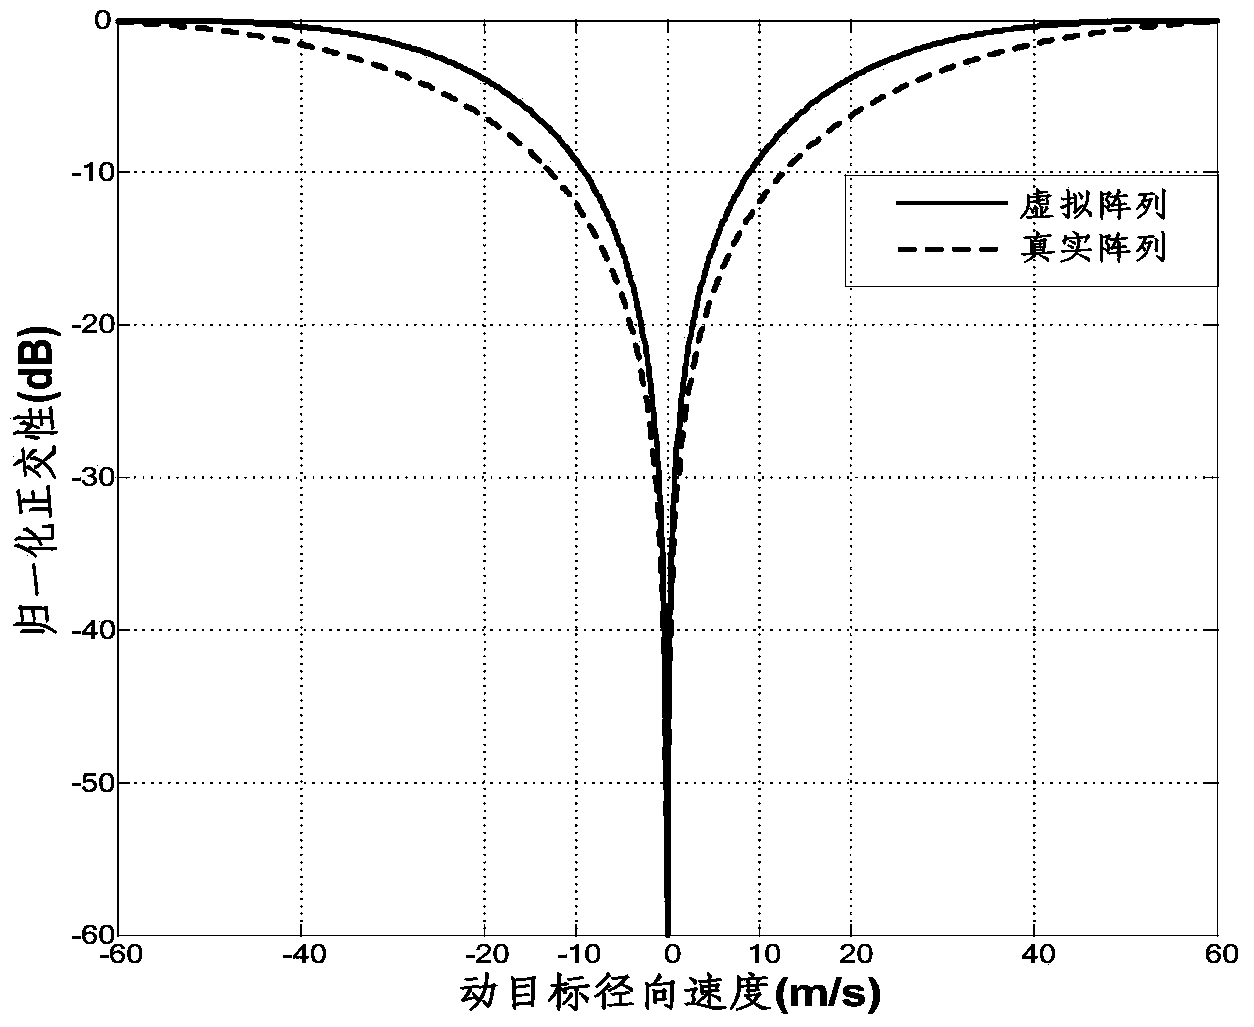 UHF waveband multi-channel radar radial speed detection method based on tensor product